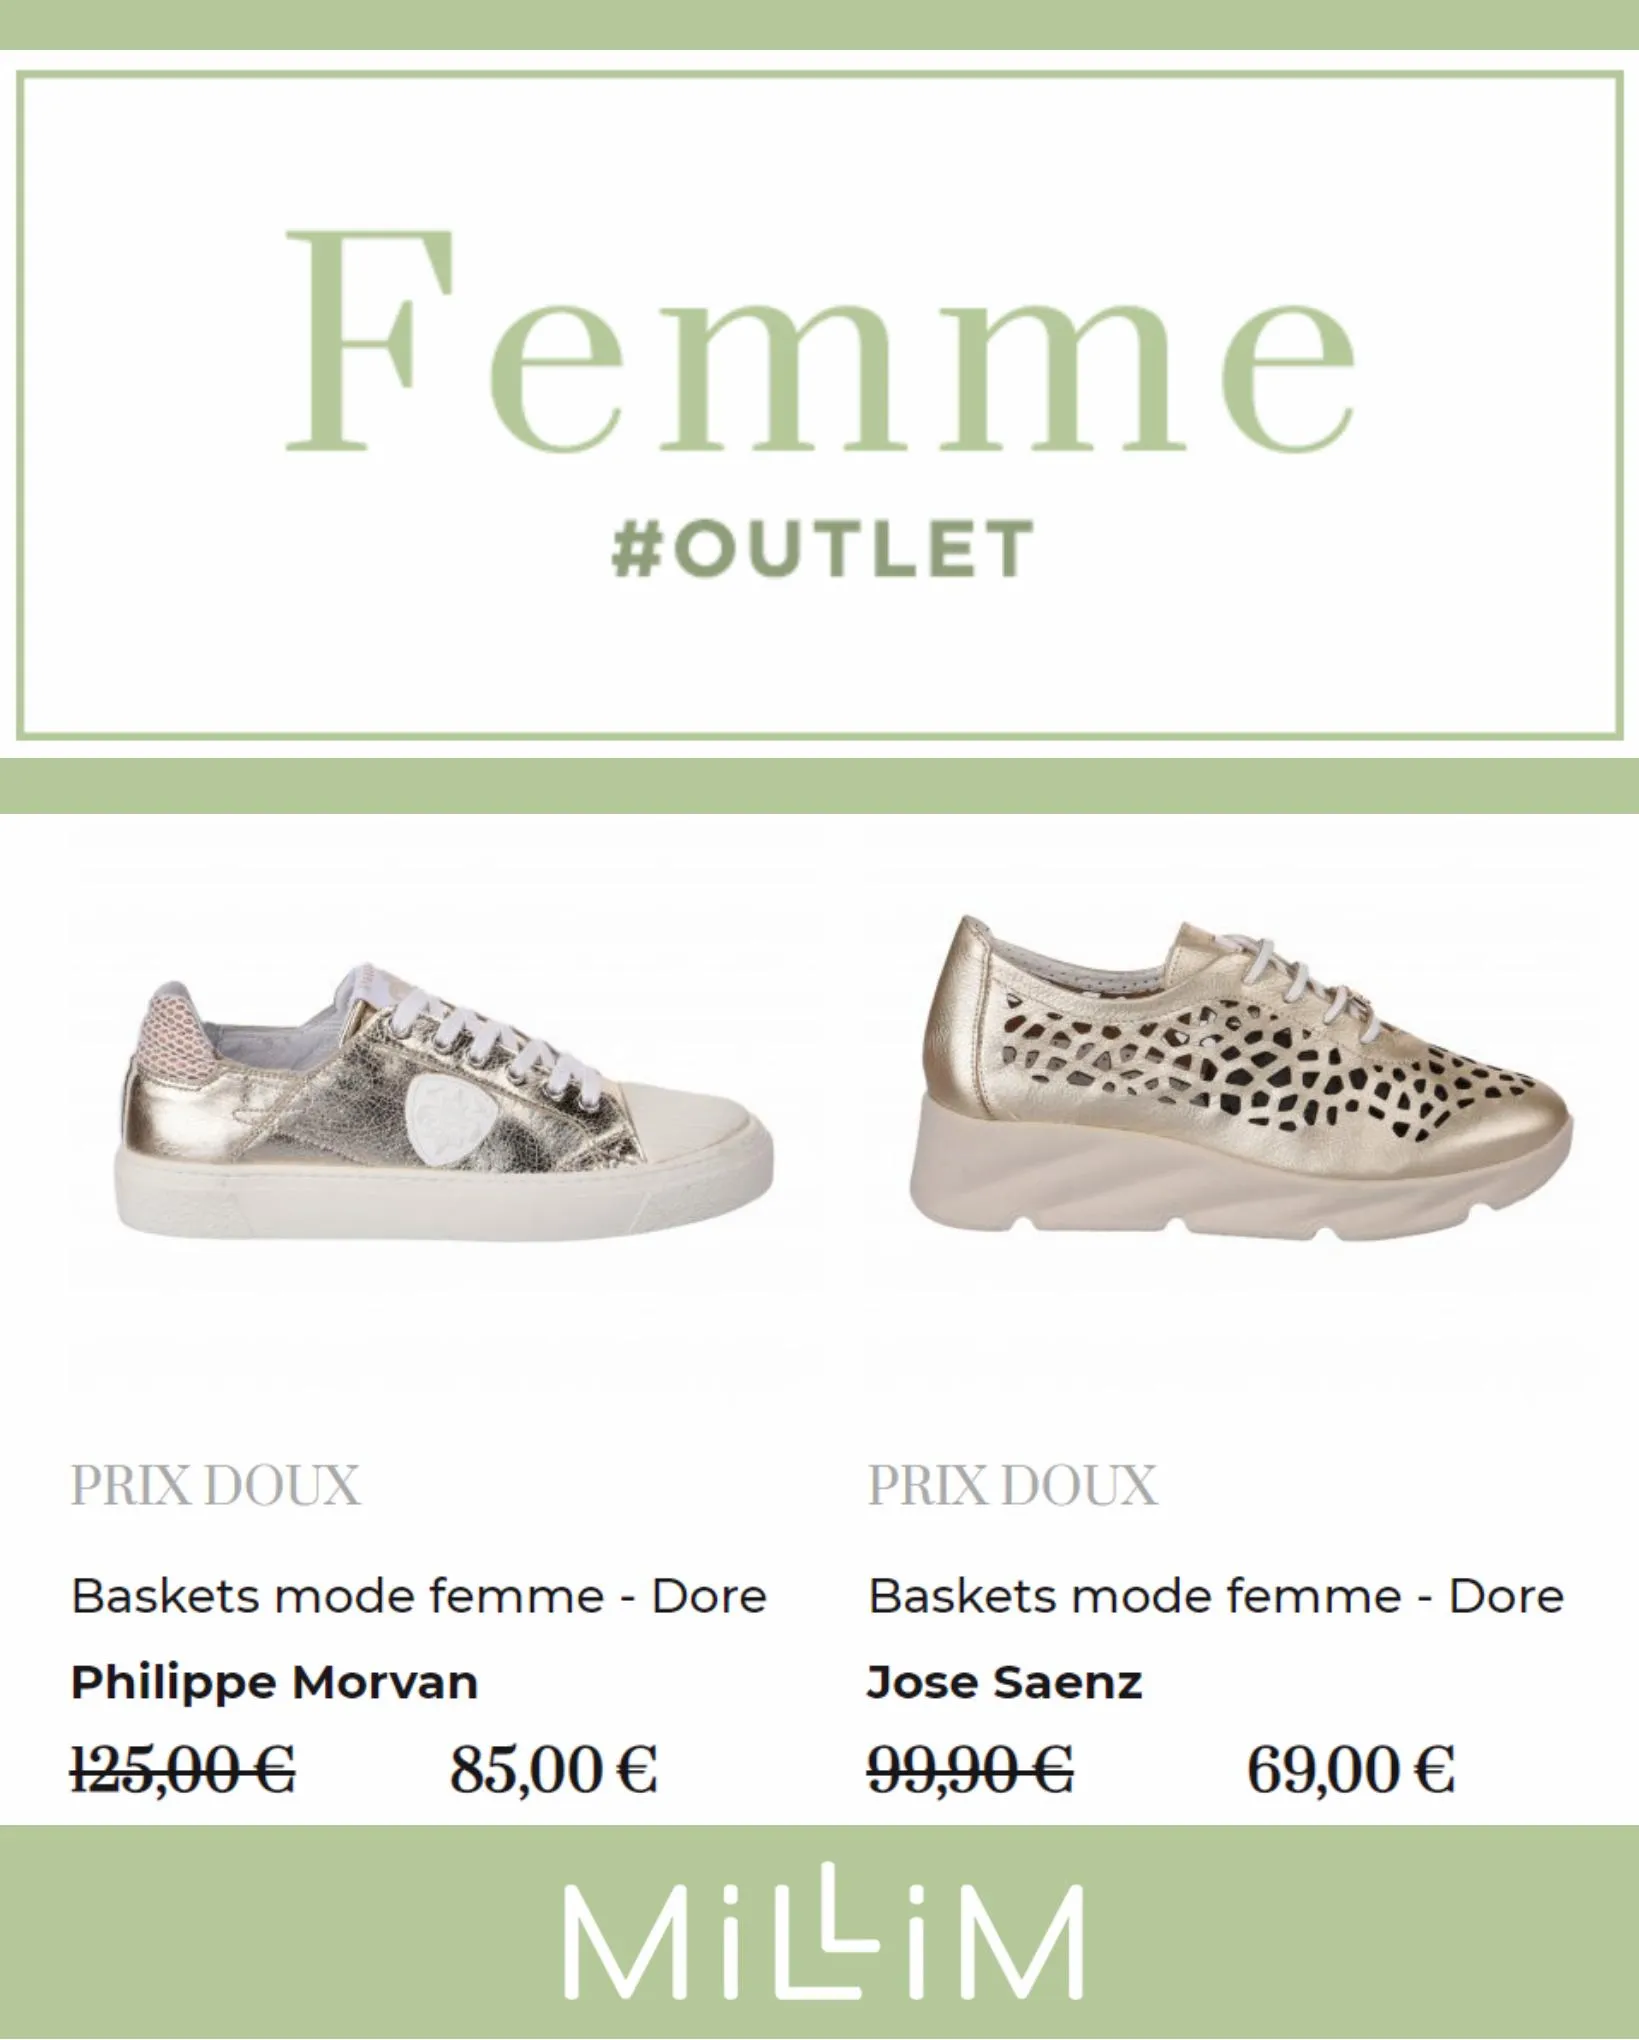 Catalogue Femme #Outlet, page 00005